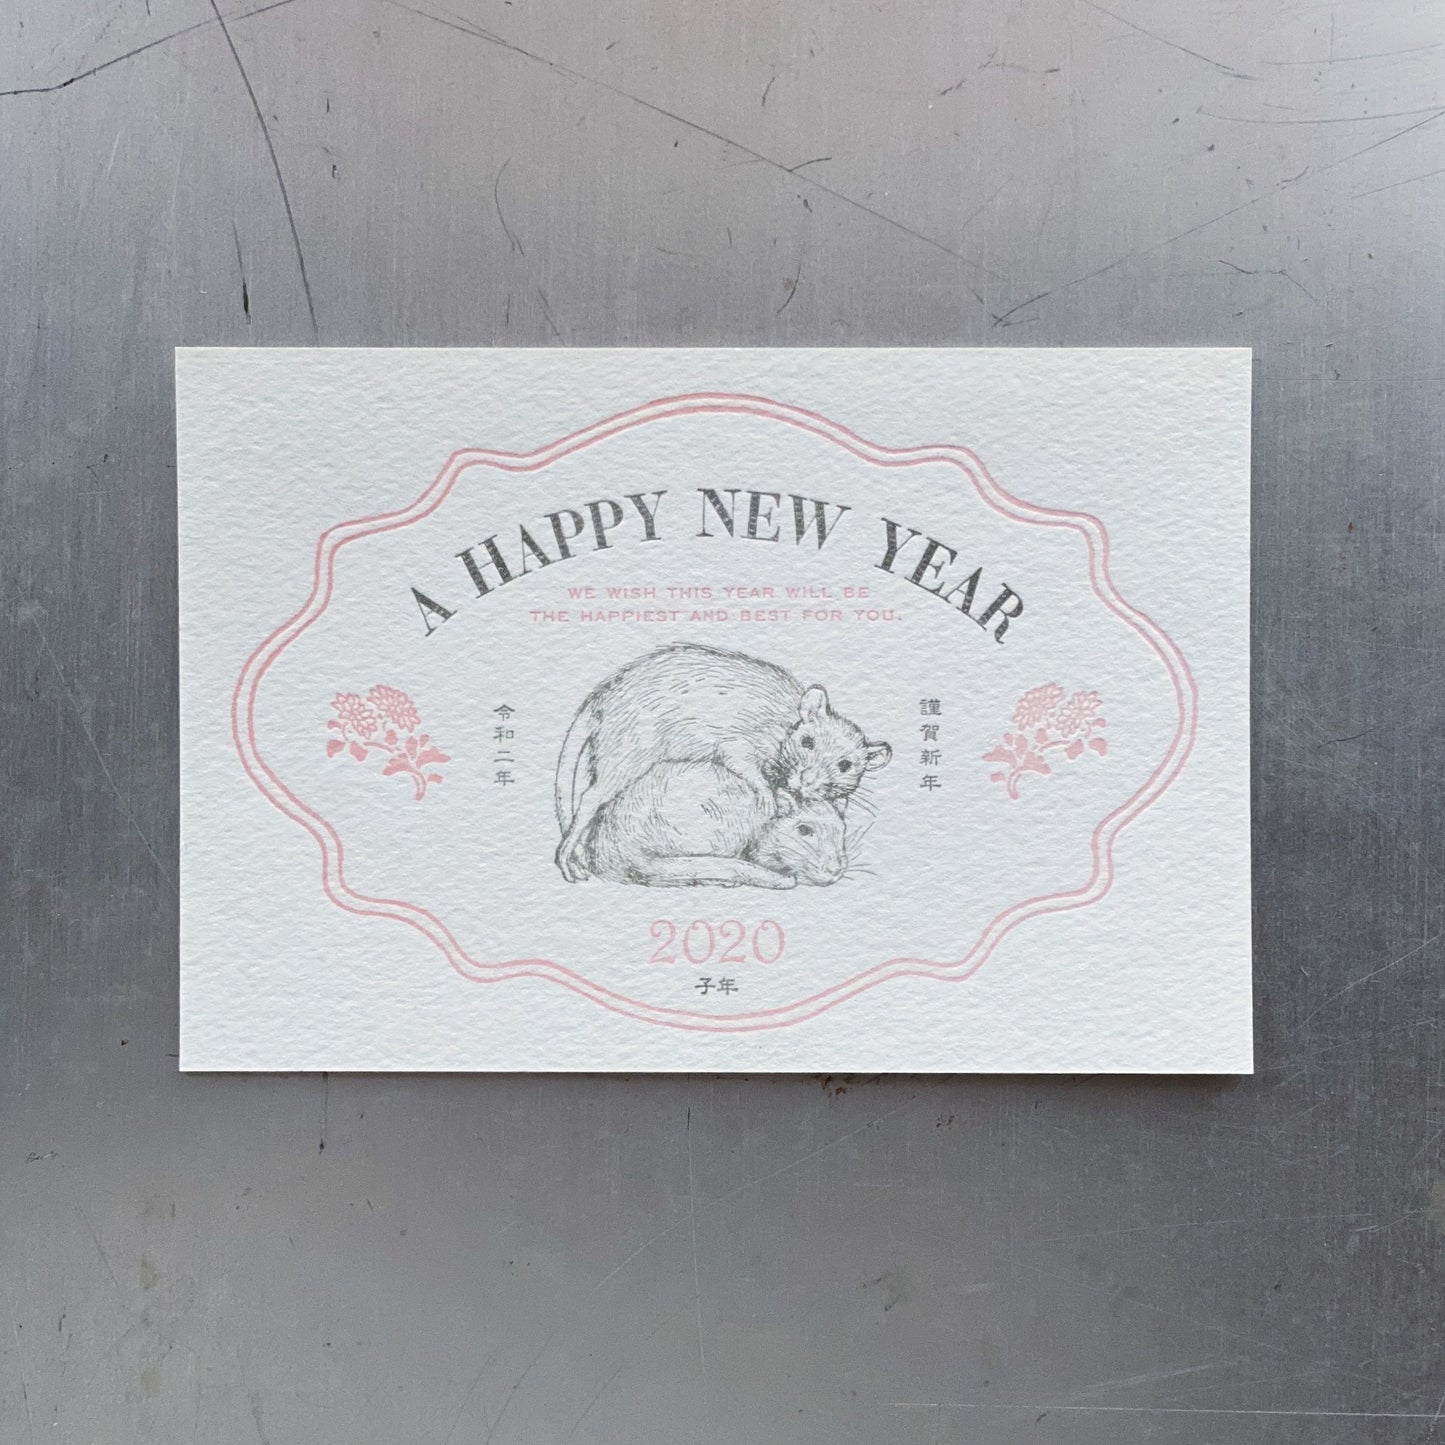 NEW YEAR CARD